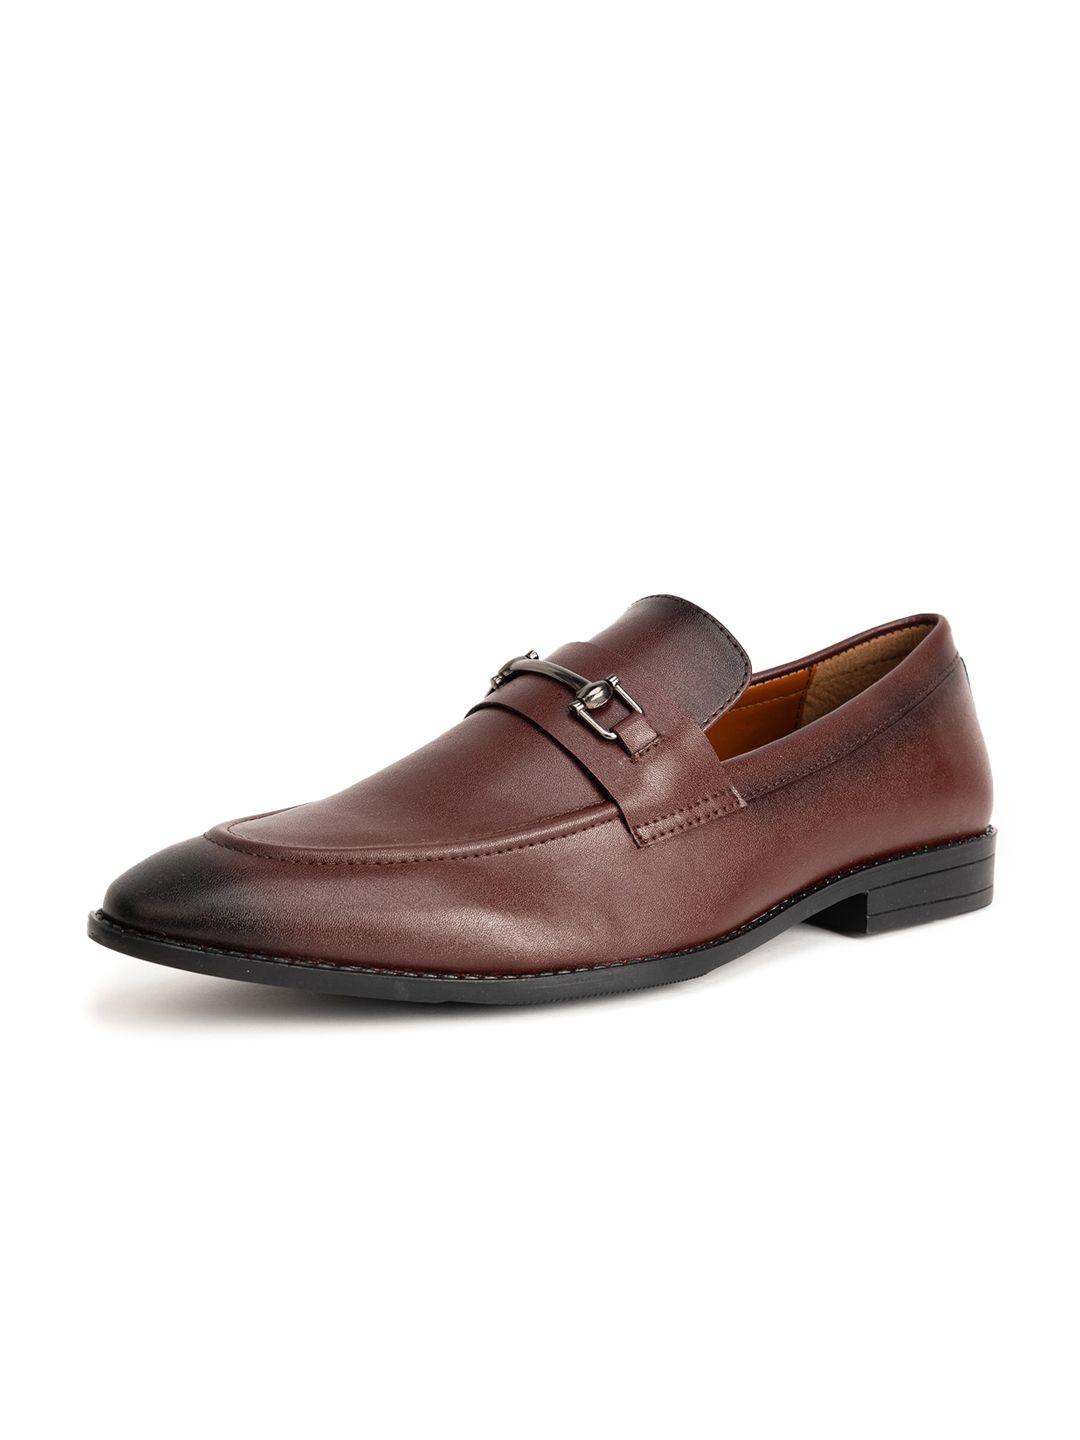 louis-stitch-men-leather-formal-horsebit-loafers